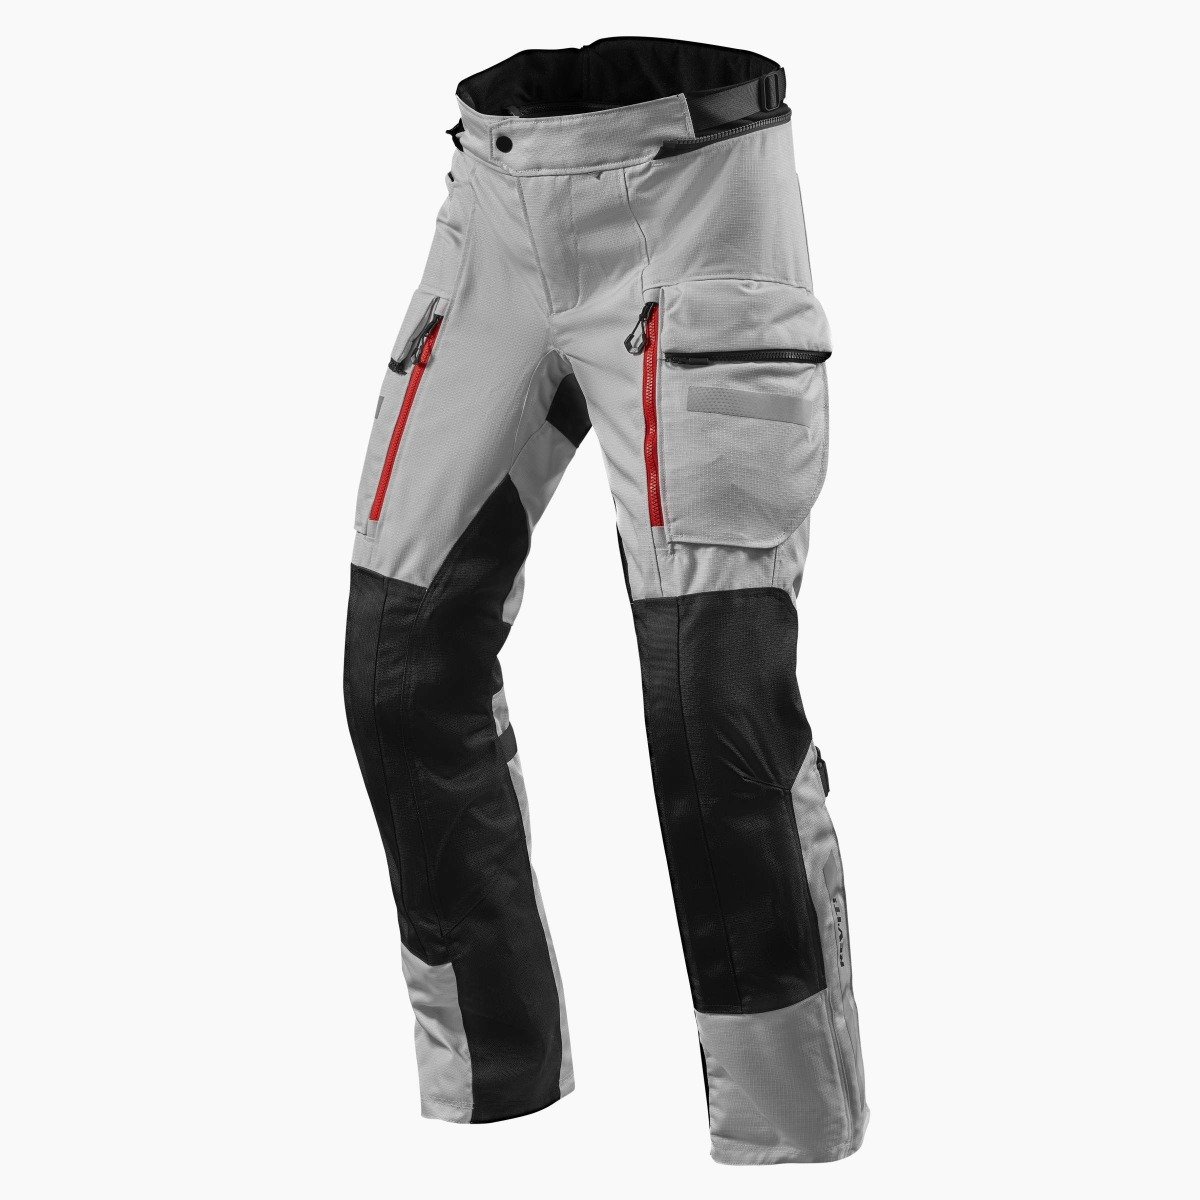 Image of REV'IT! Sand 4 H2O Standard Silver Black Motorcycle Pants Size M EN